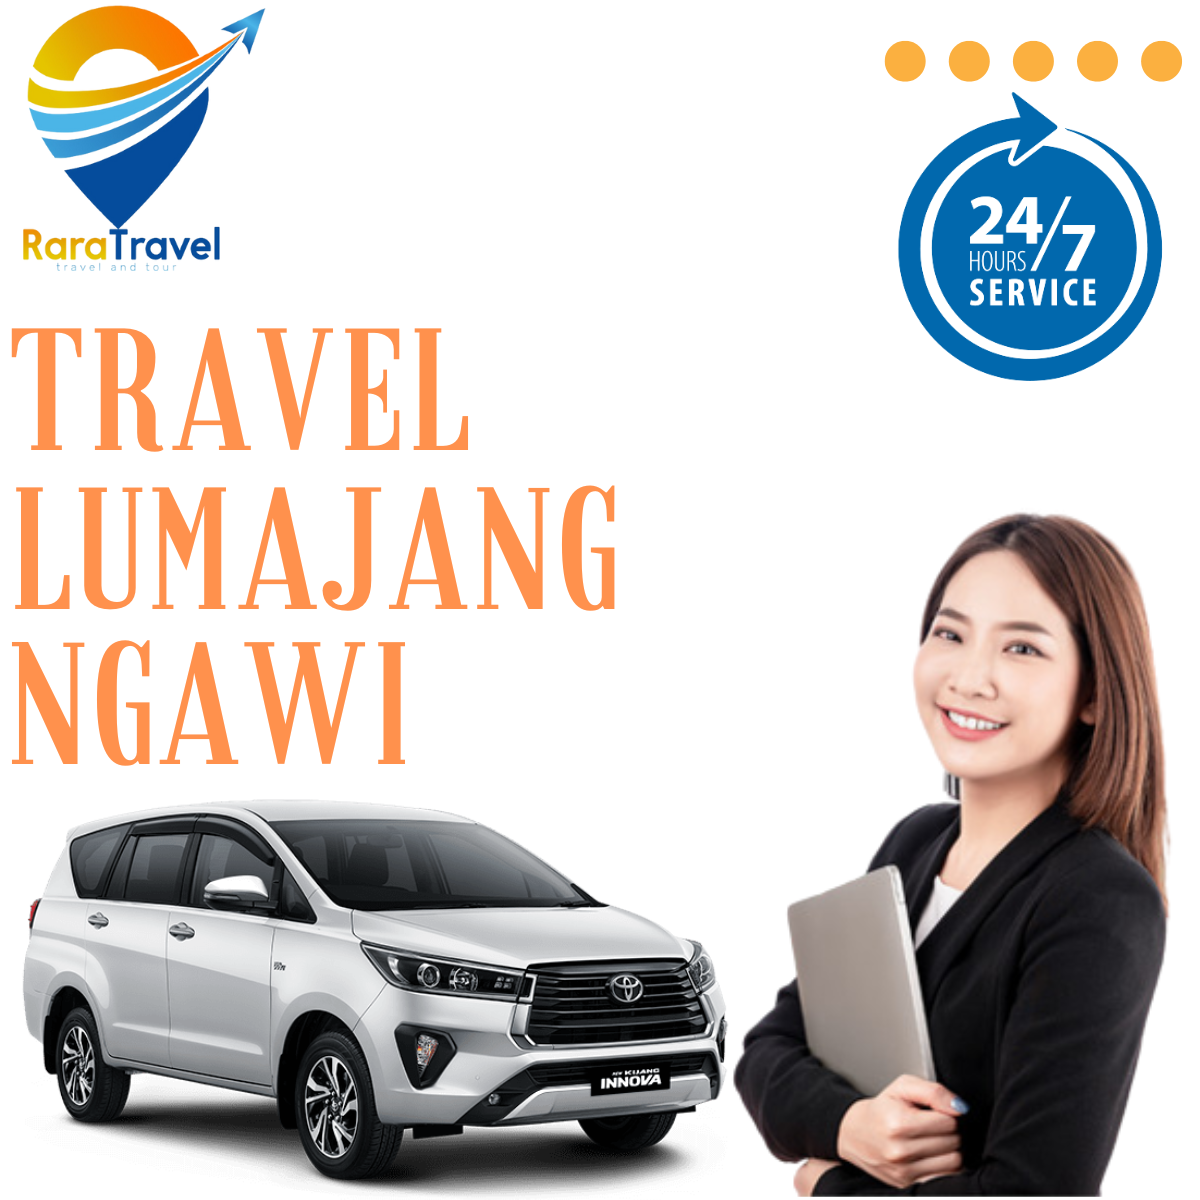 Travel Lumajang Ngawi PP via Toll Harga Tiket Murah